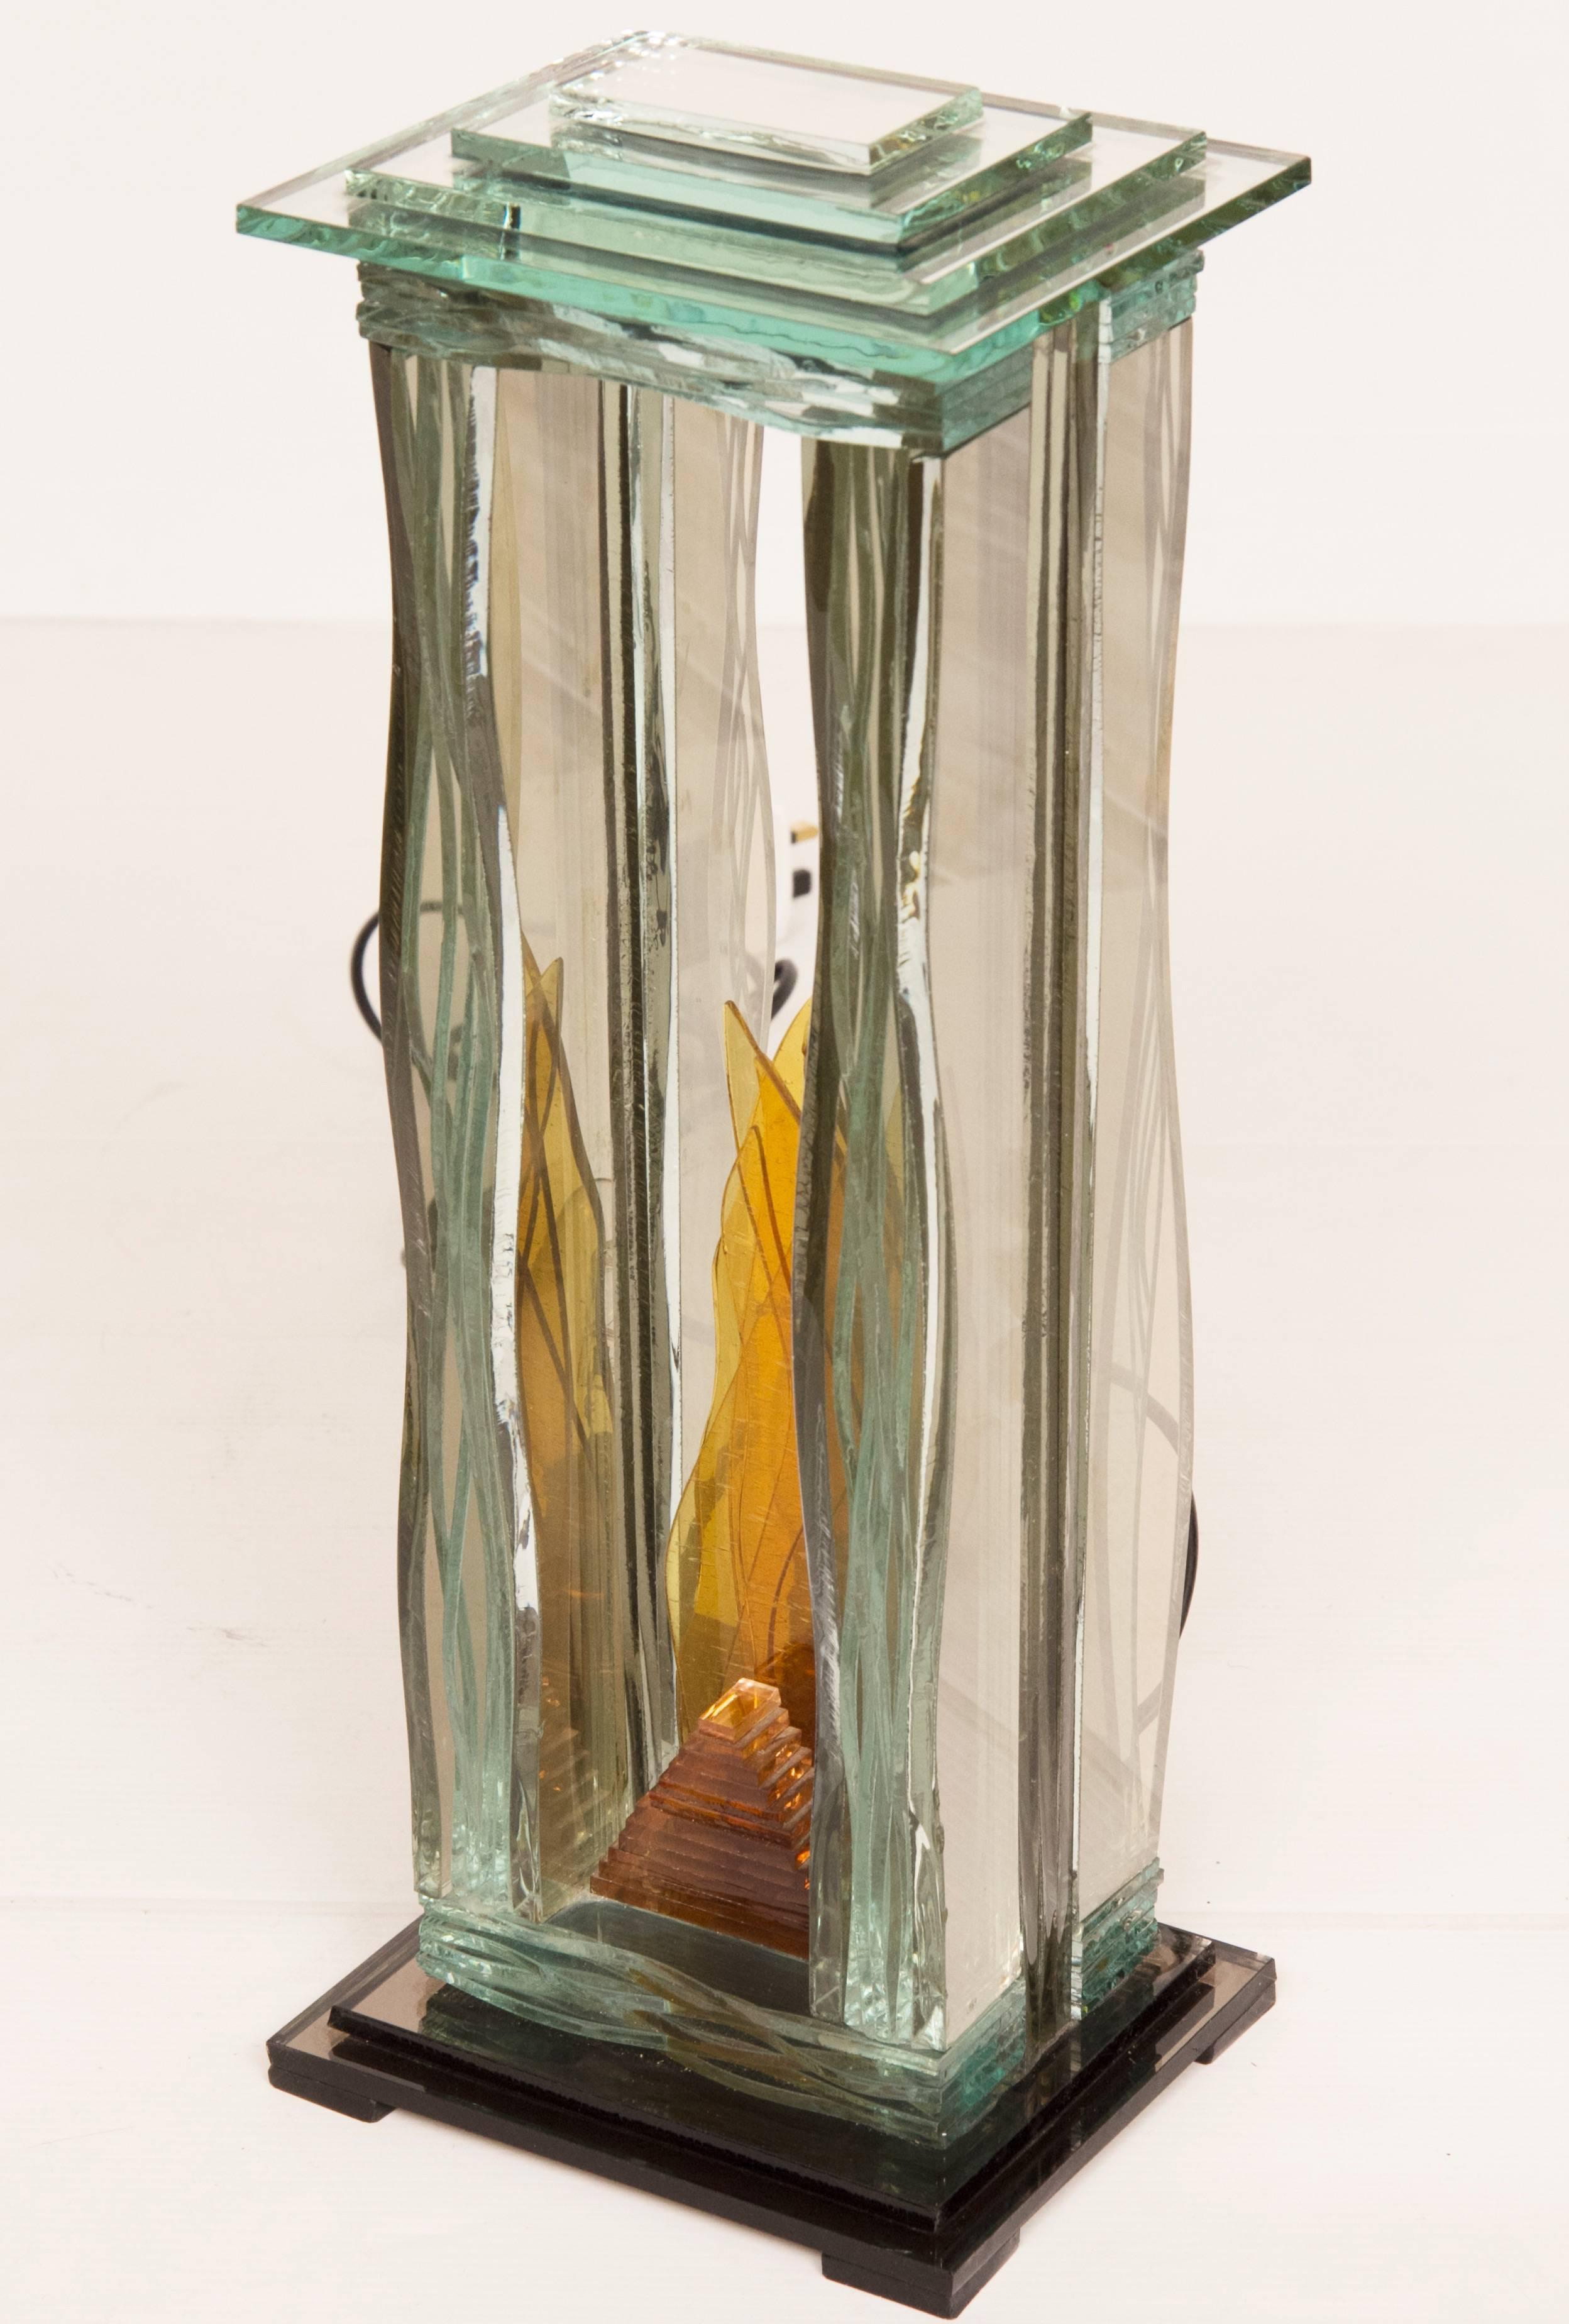 Midcentury Italian glass sculpture table lamp
Stunning midcentury glass sculpture lamp.
Measure: H 42cm x W 17cm x D 14cm
Italy, circa 1980.